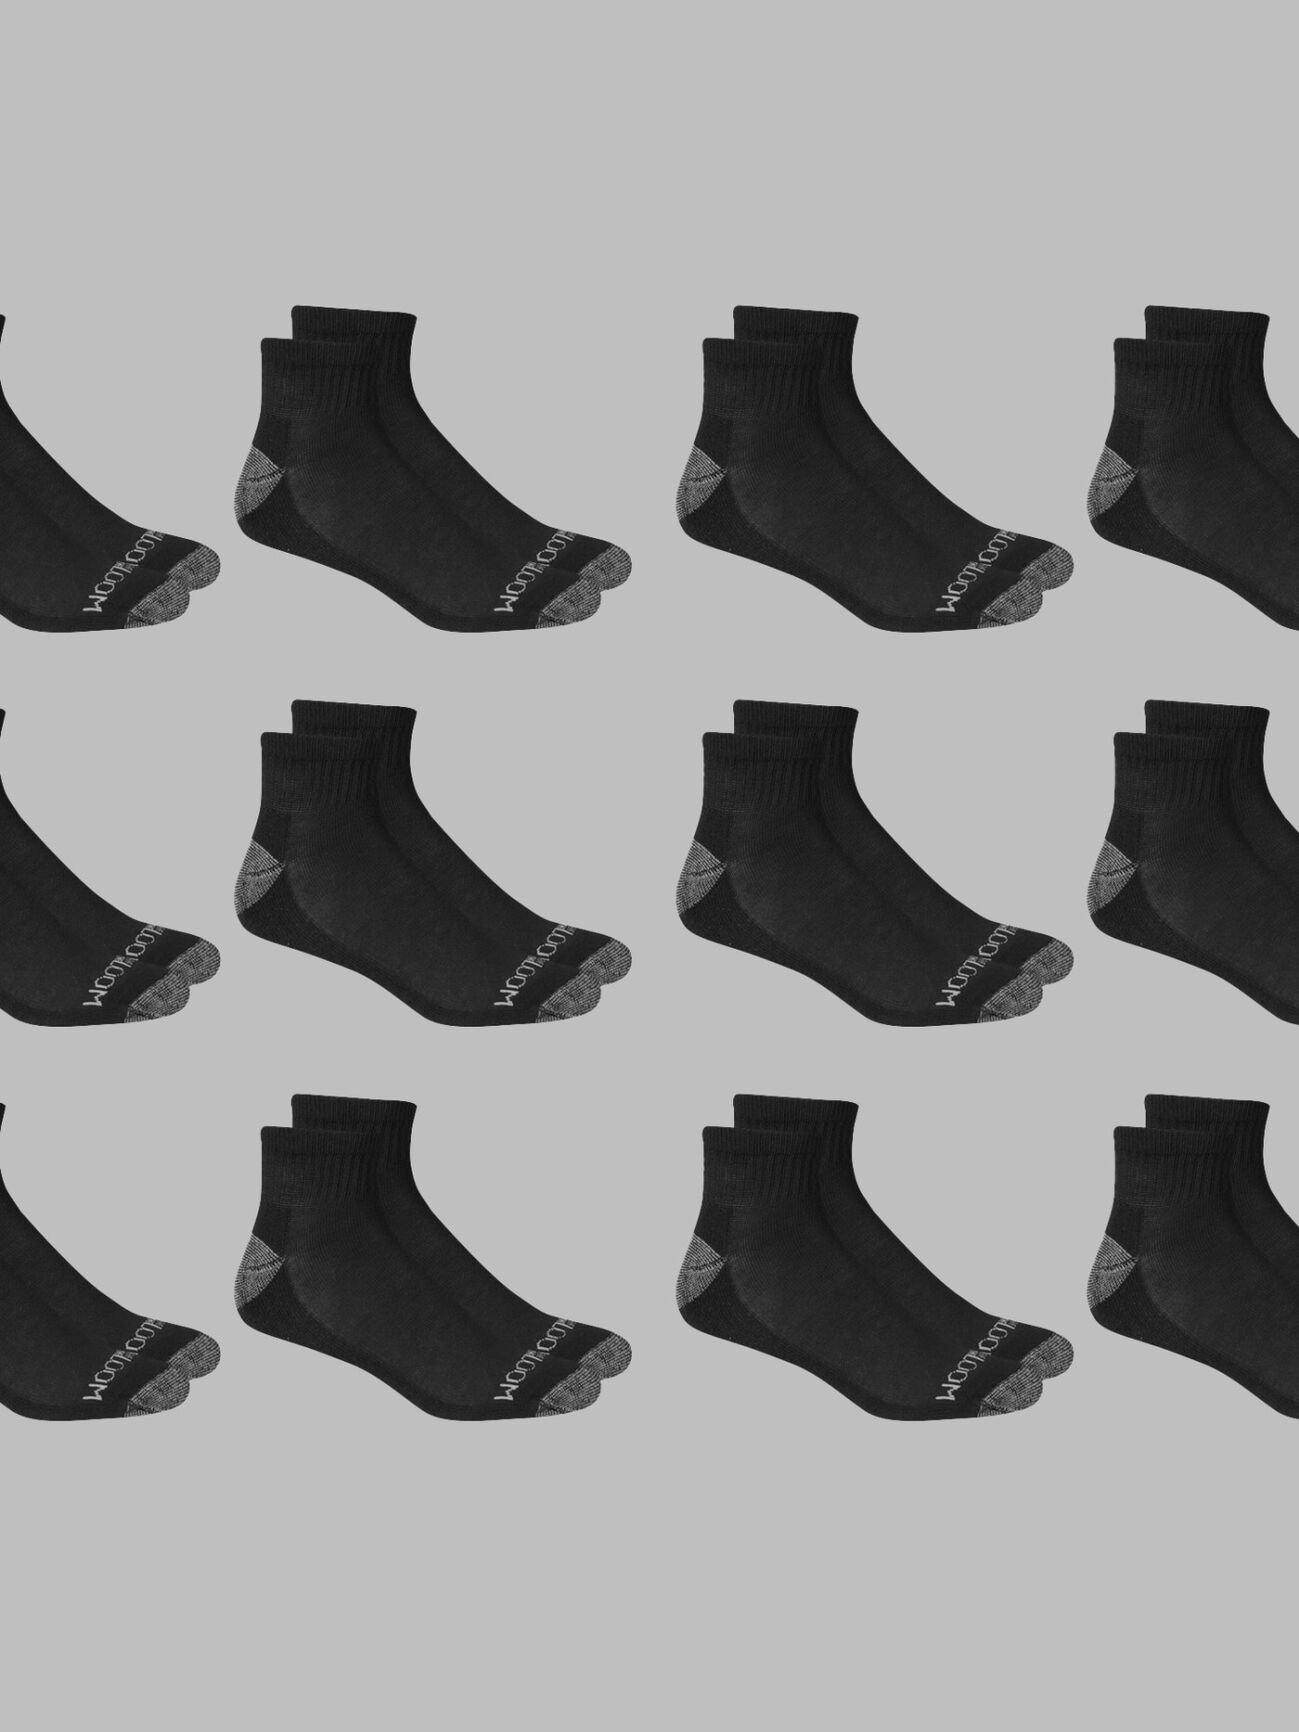 Men's Dual Defense Quarter Socks Black, 12 Pack